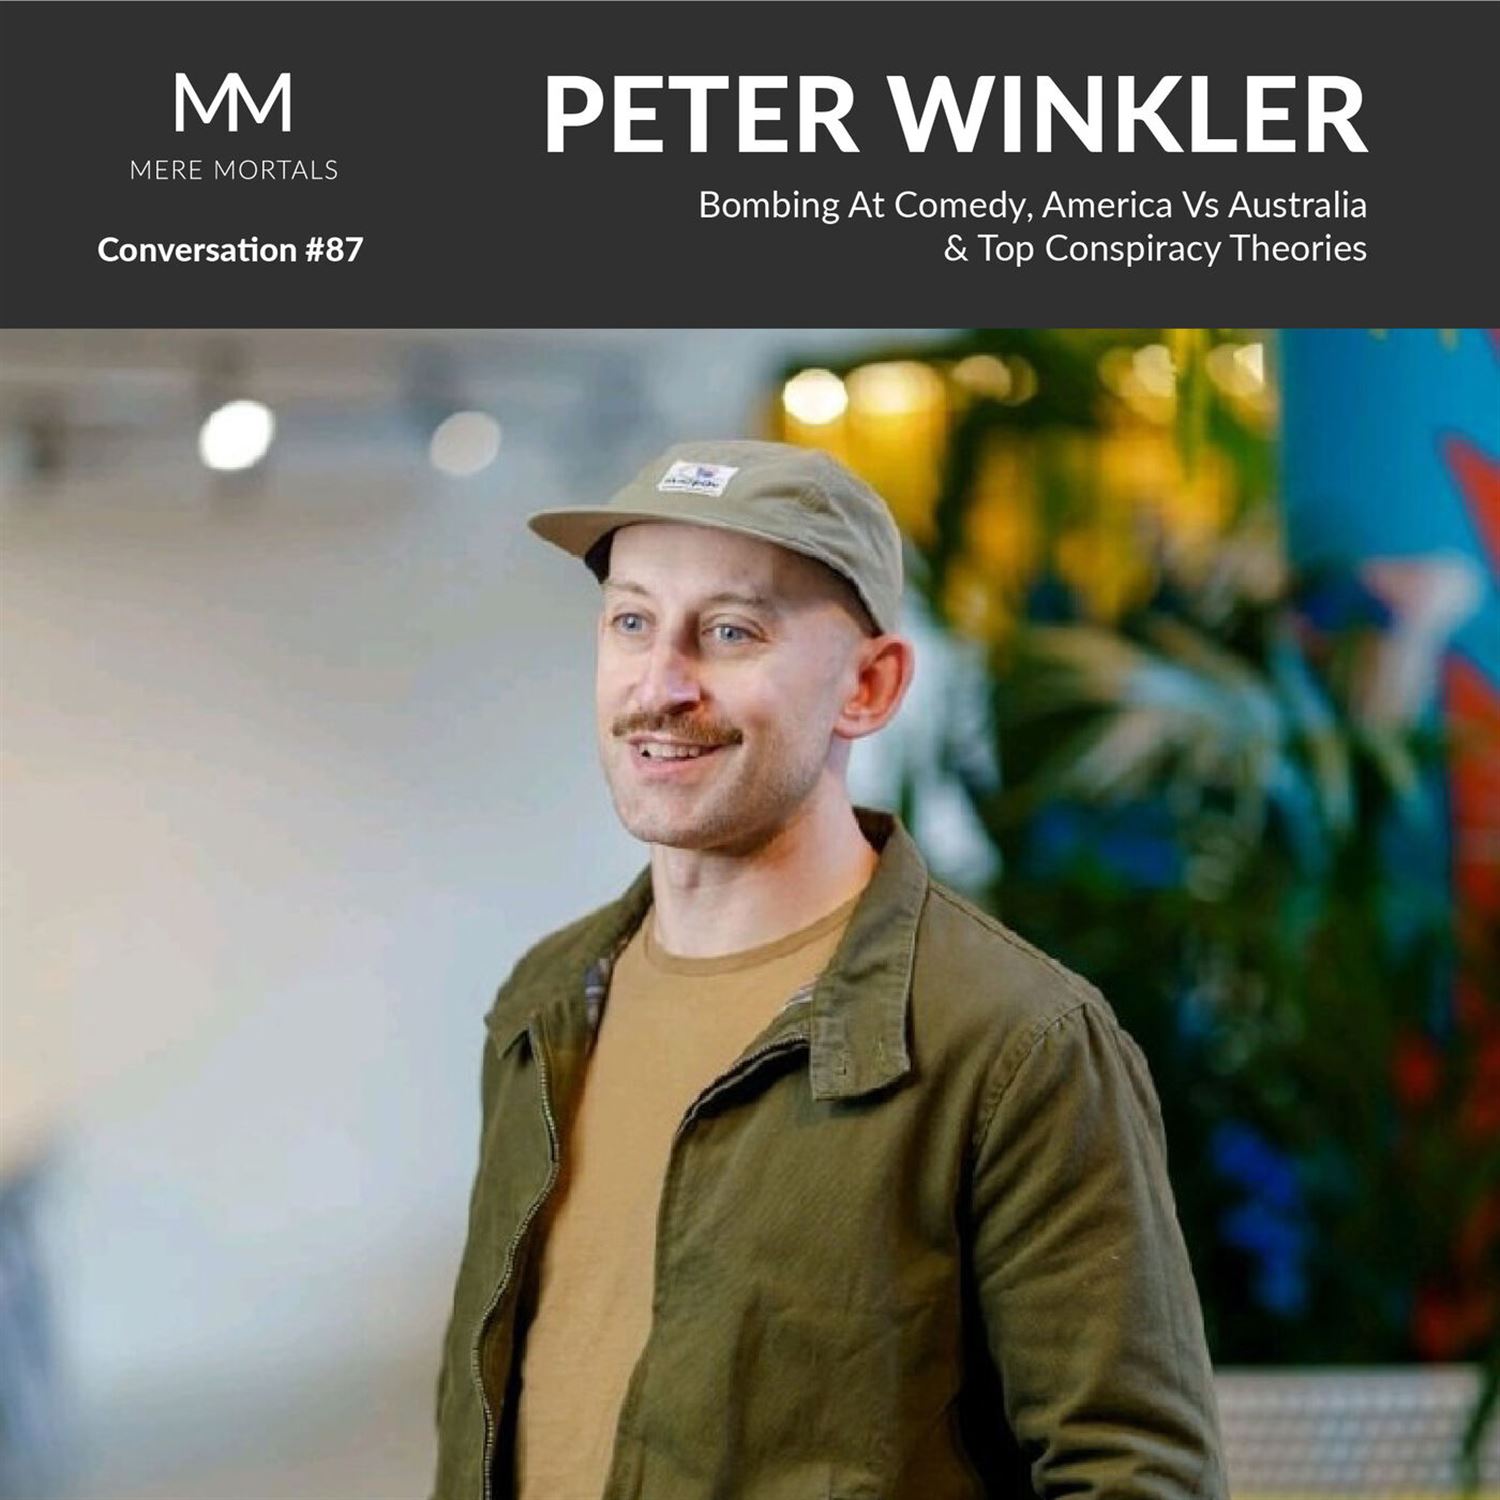 PETER WINKLER | Bombing At Comedy, America Vs Australia & Top Conspiracy Theories